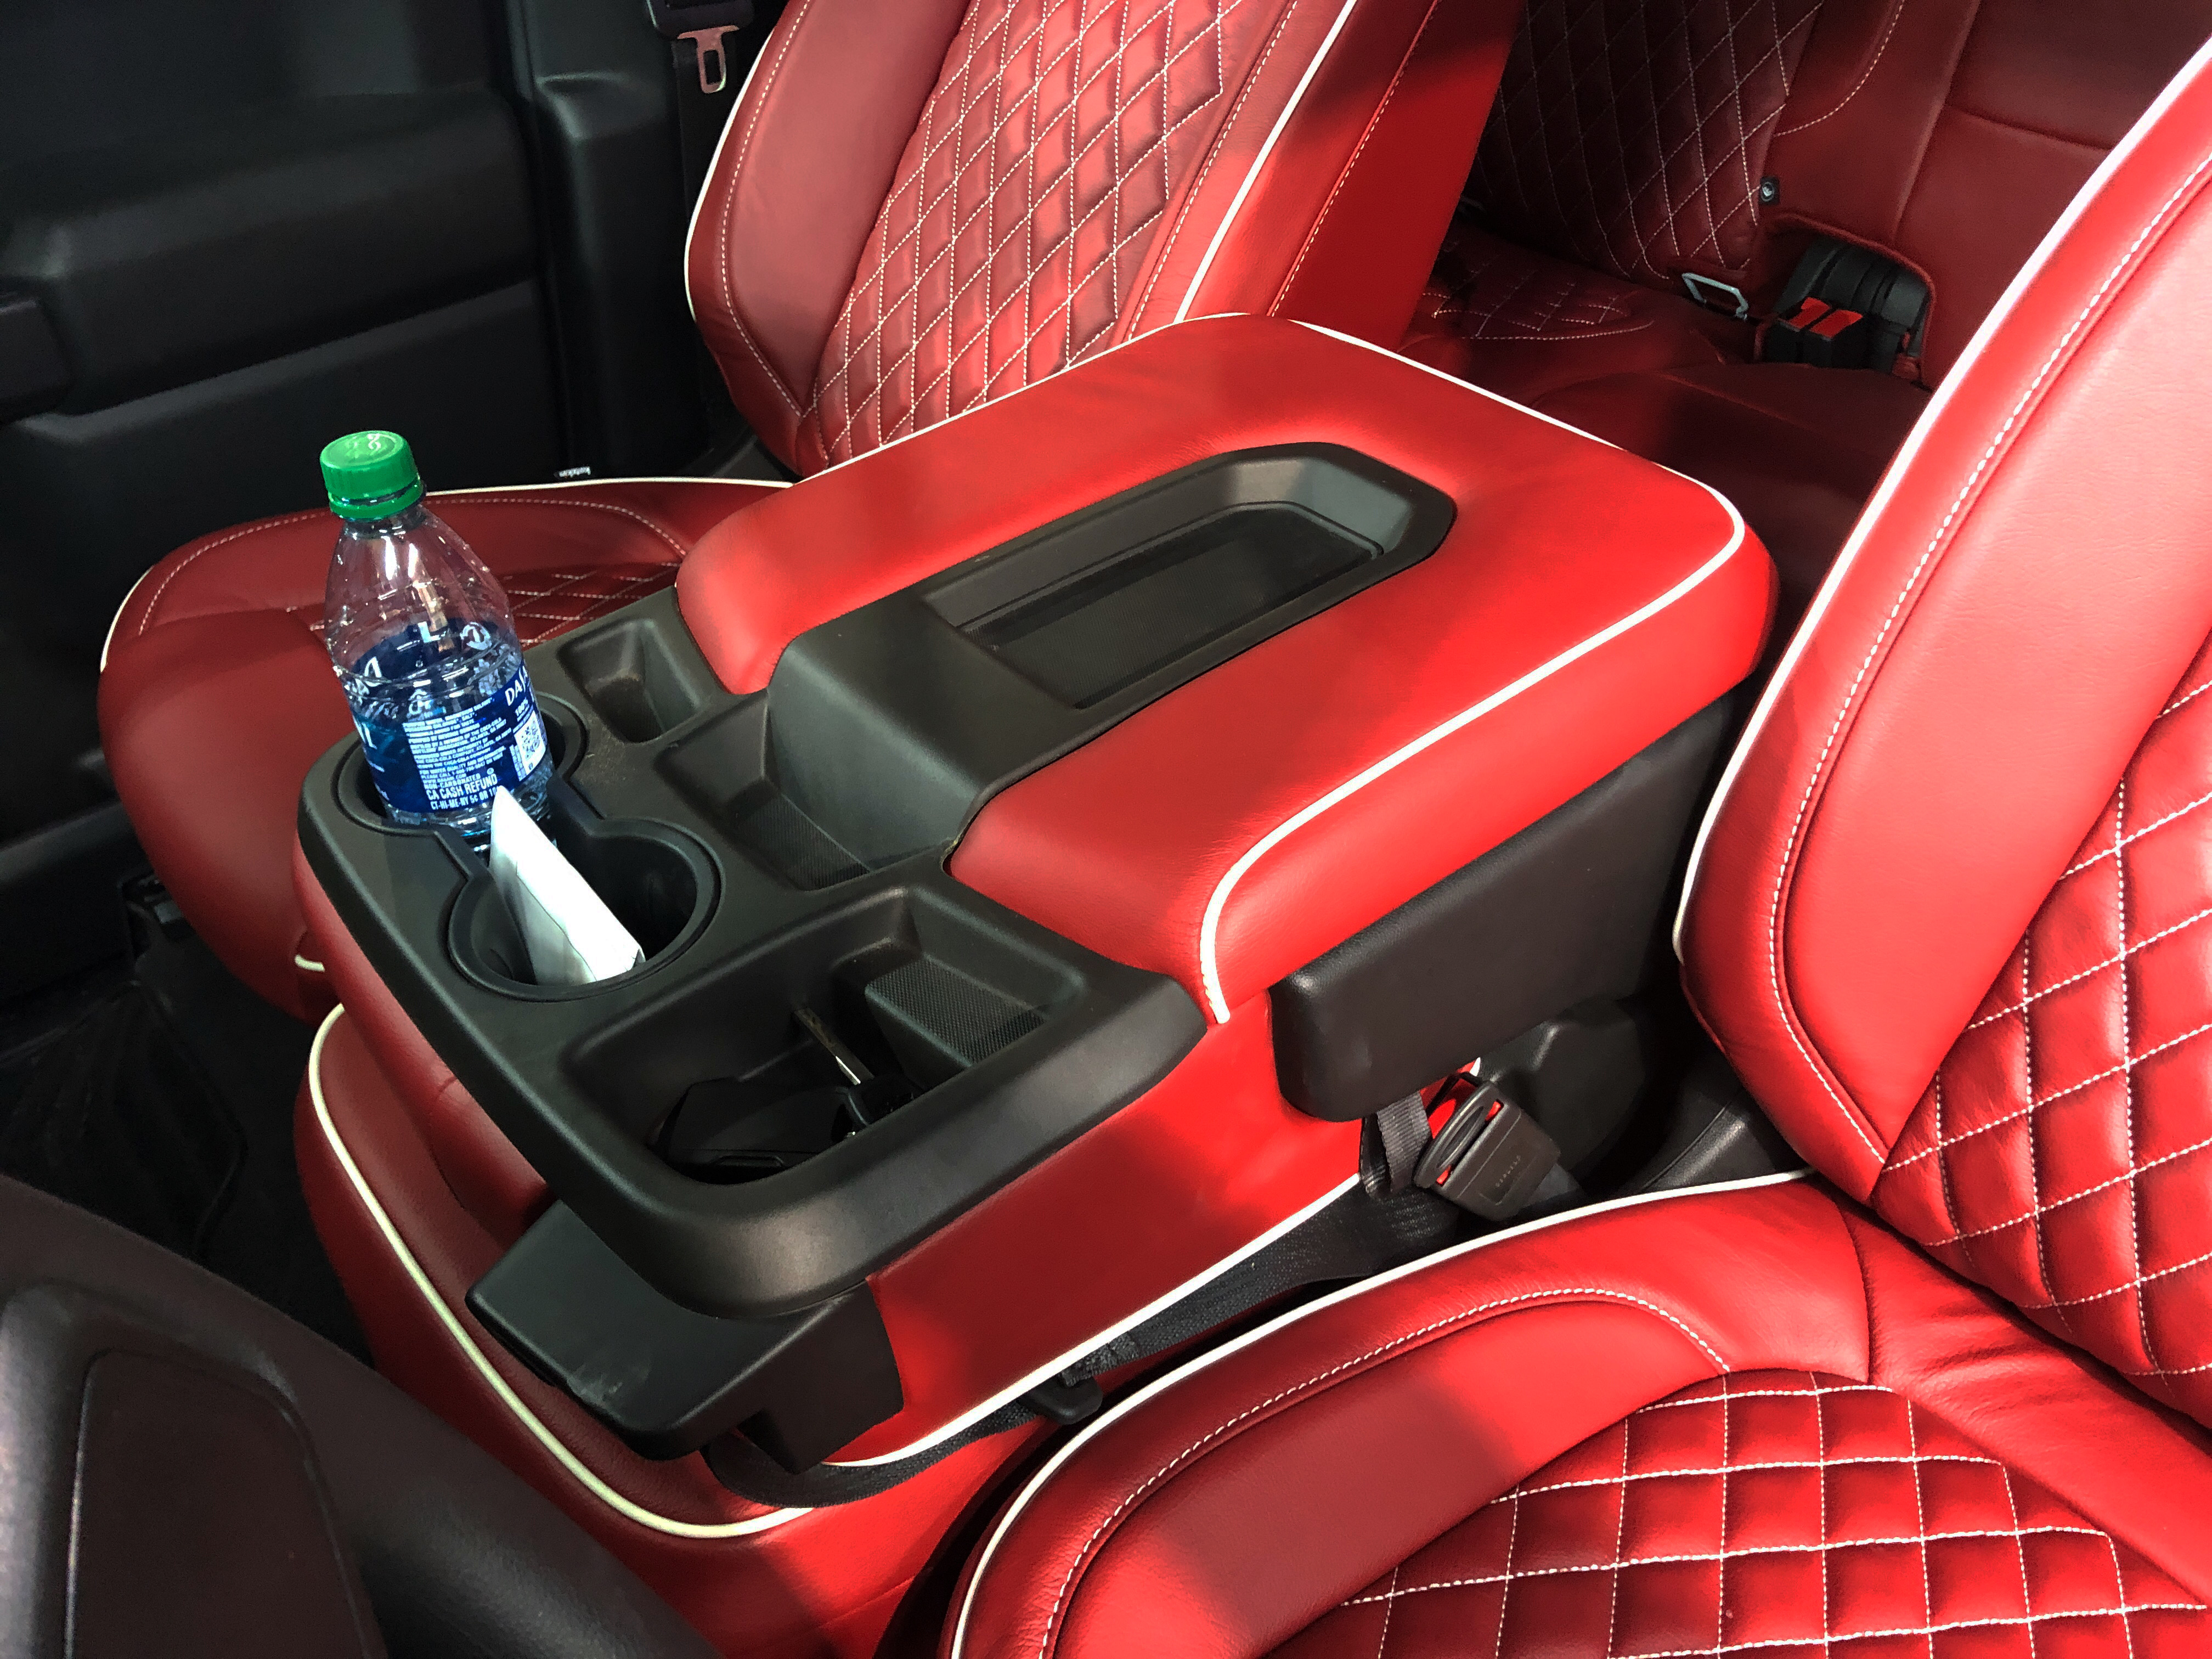 2019 Chevy Trail Boss V8, Custom Red Leather Interior. - 6SpeedOnline